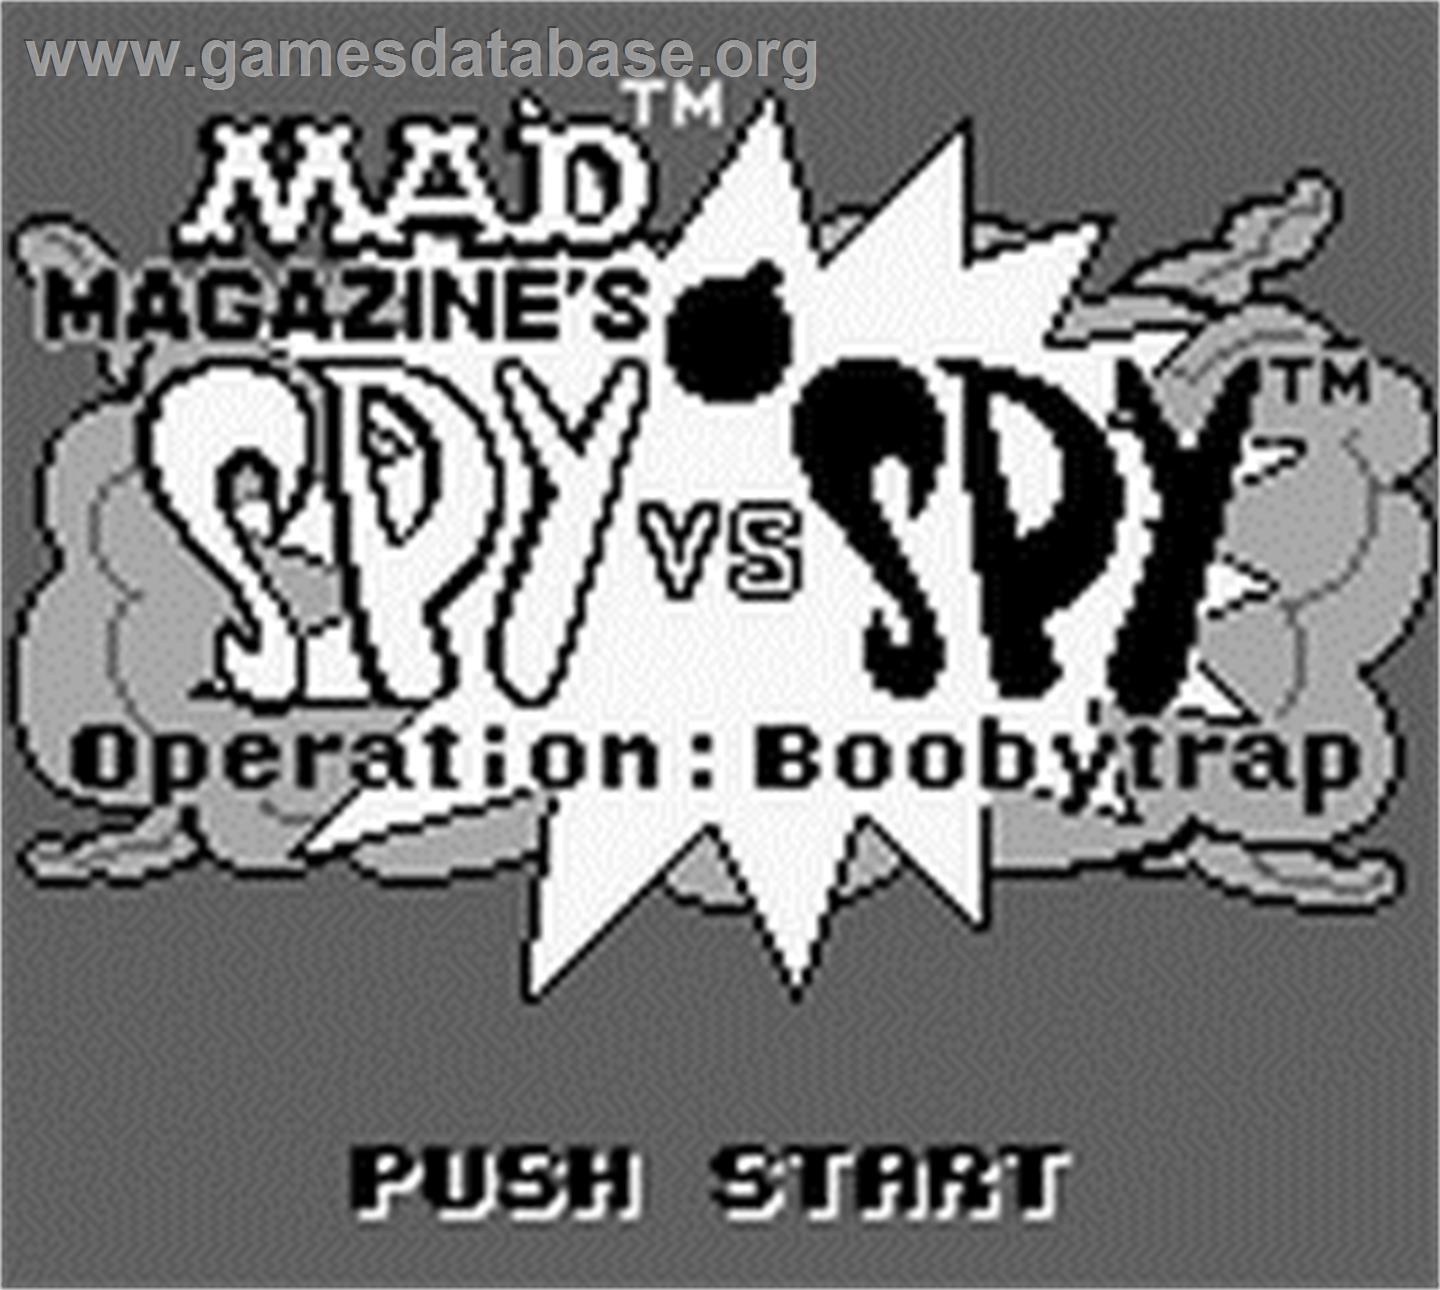 Spy vs Spy - Operation Boobytrap - Nintendo Game Boy - Artwork - Title Screen